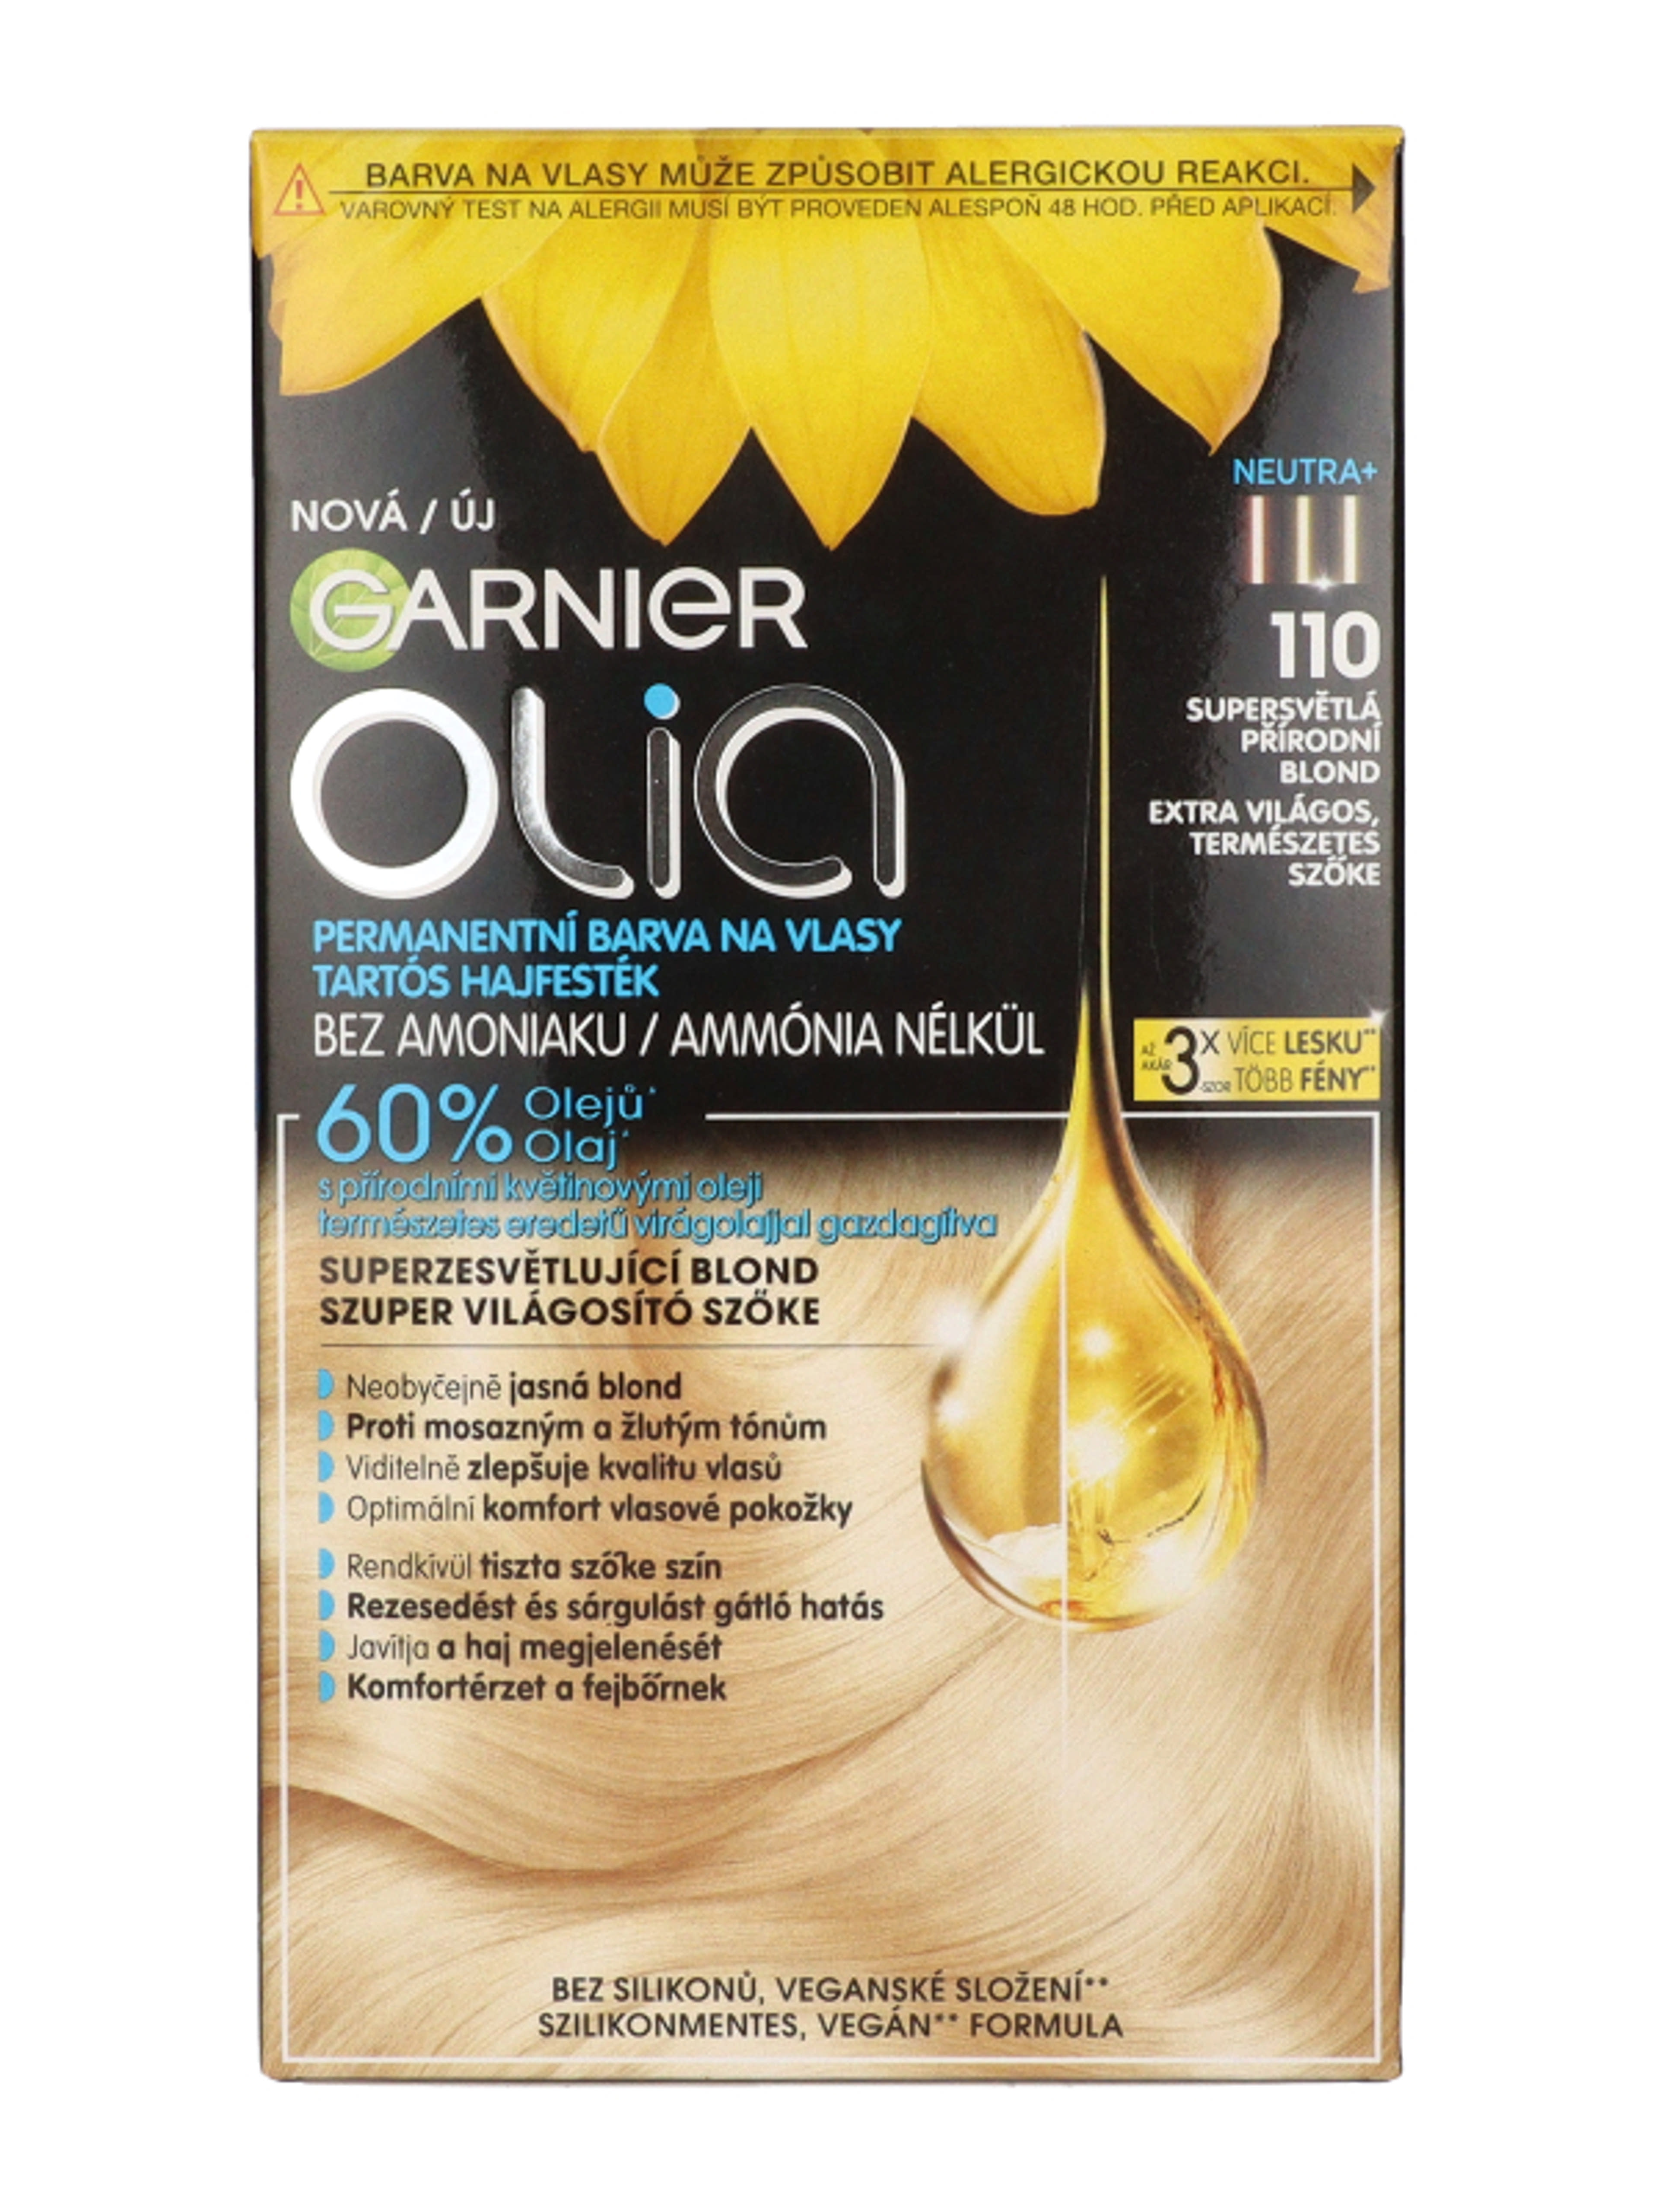 Garnier Olia tartós hajfesték /110 super light natural blonde - 1 db